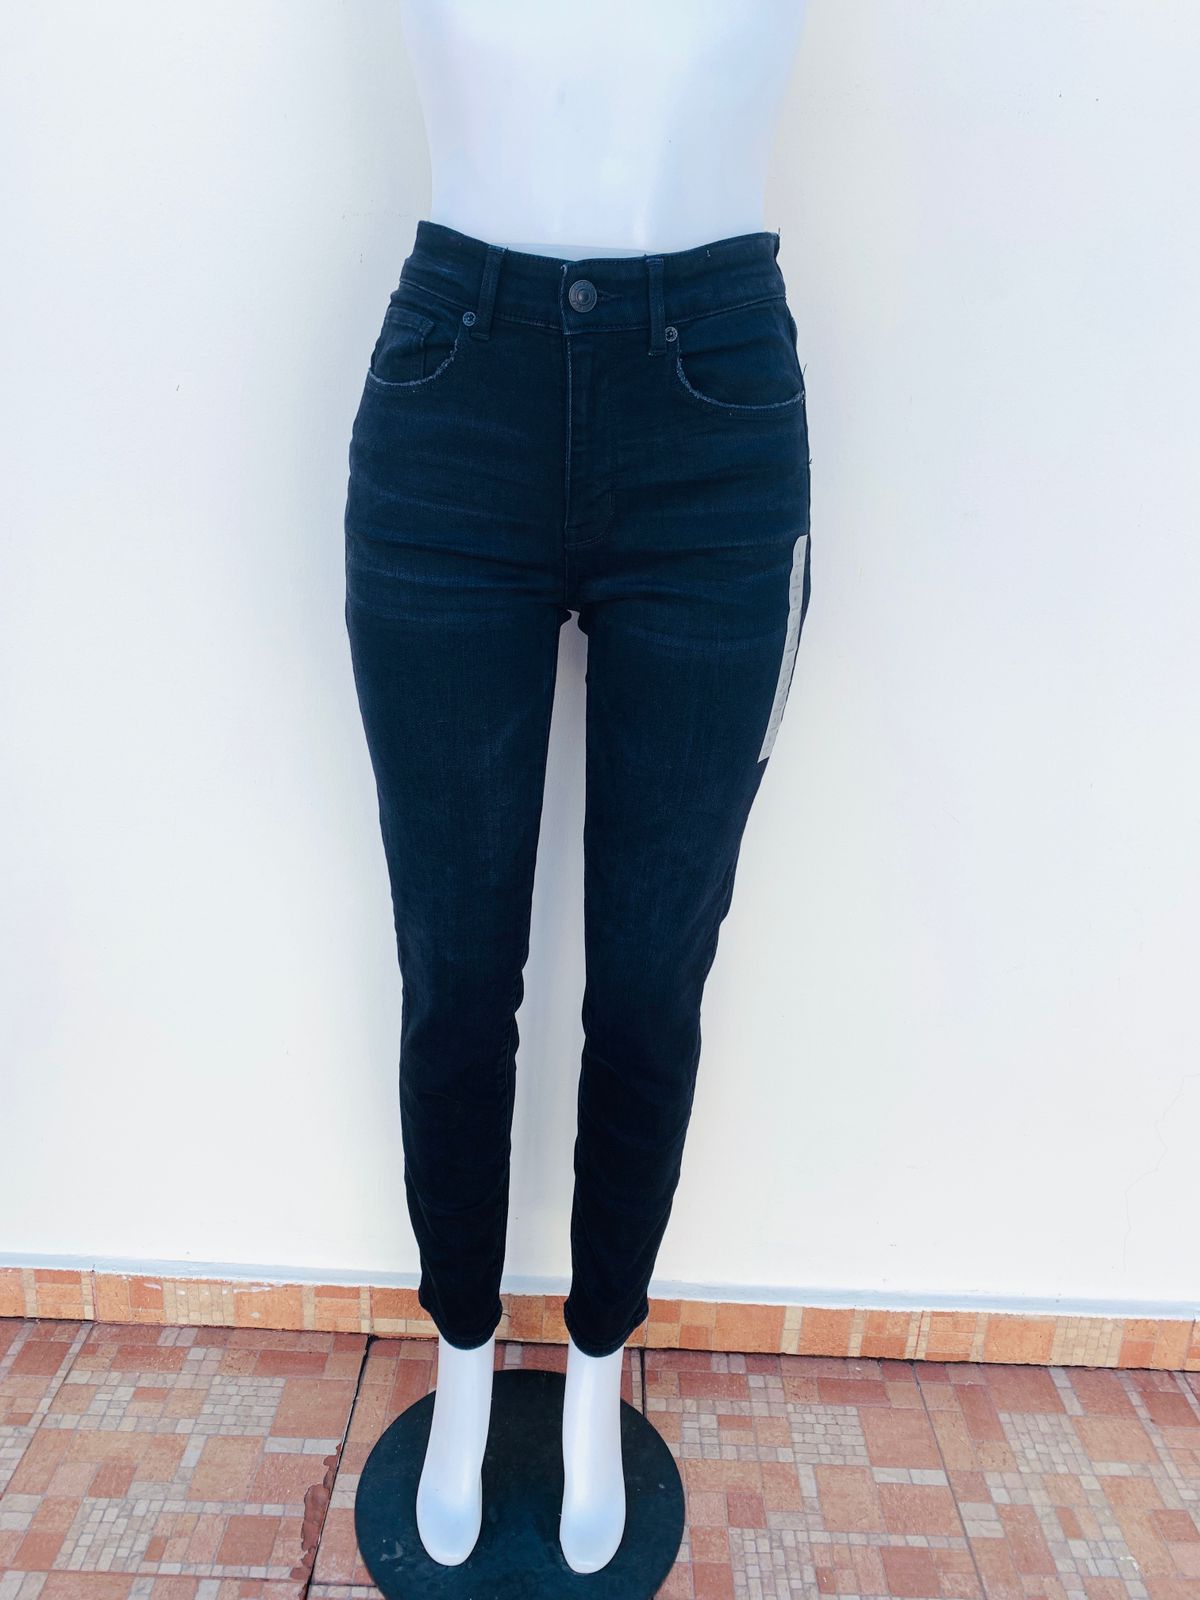 Pantalon jeans American Eagle original de color negro liso NEXT LEVEL